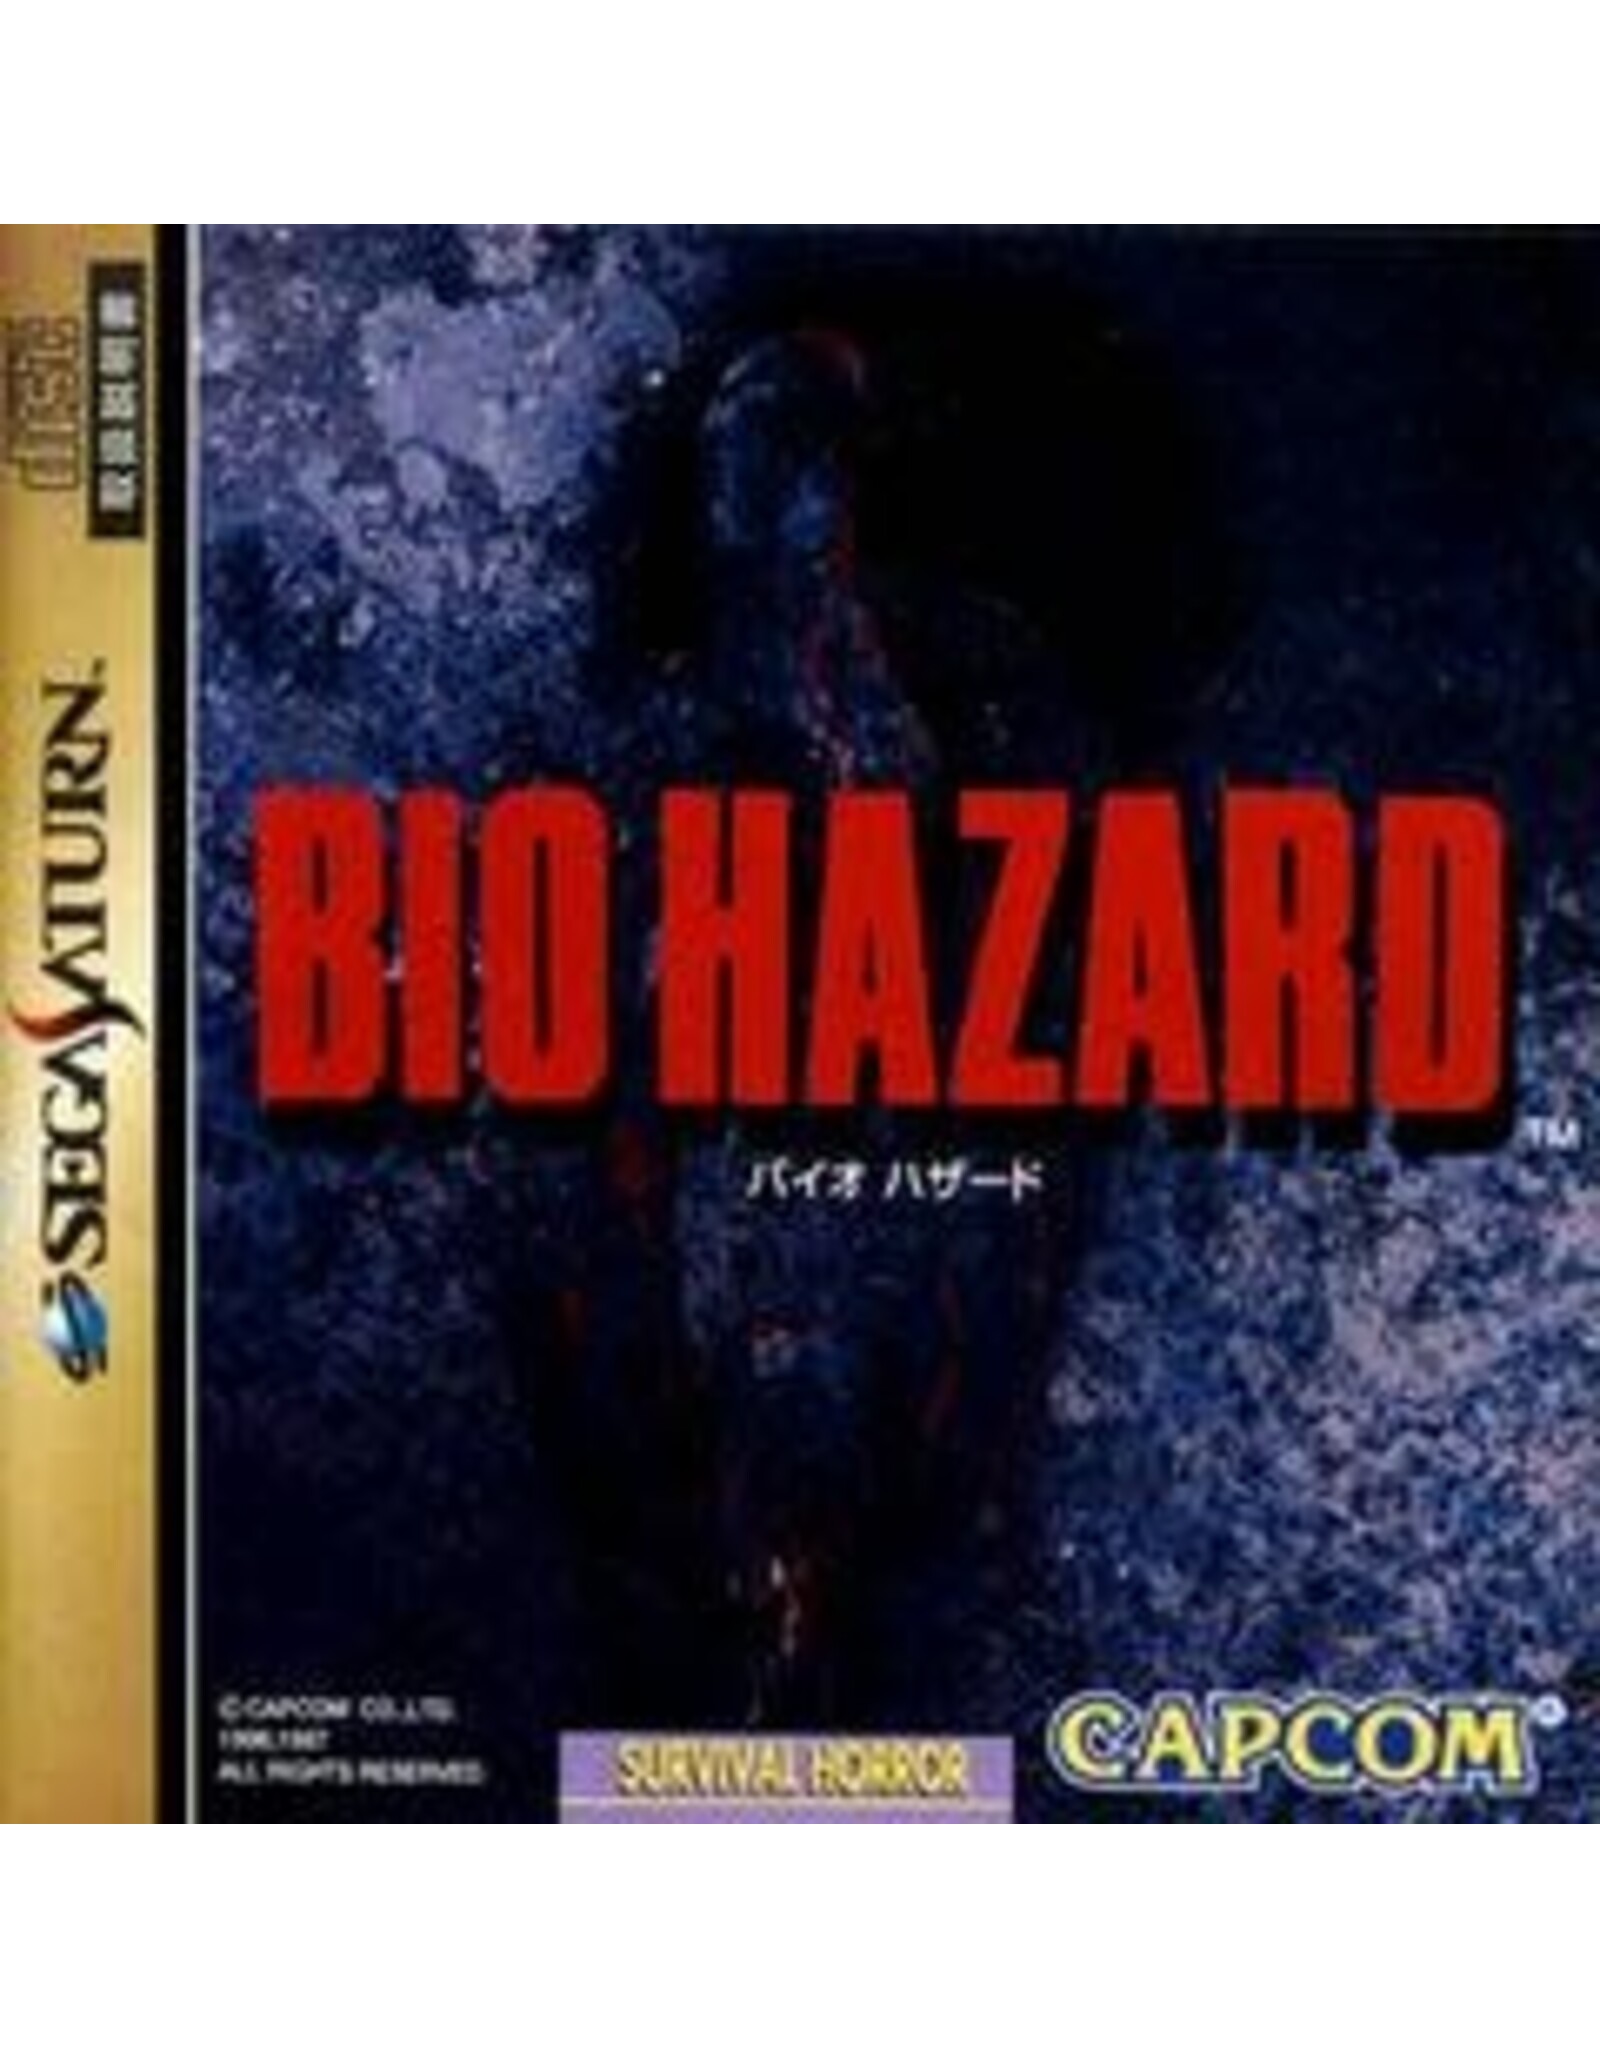 Sega Saturn Biohazard - JP Import (Used)